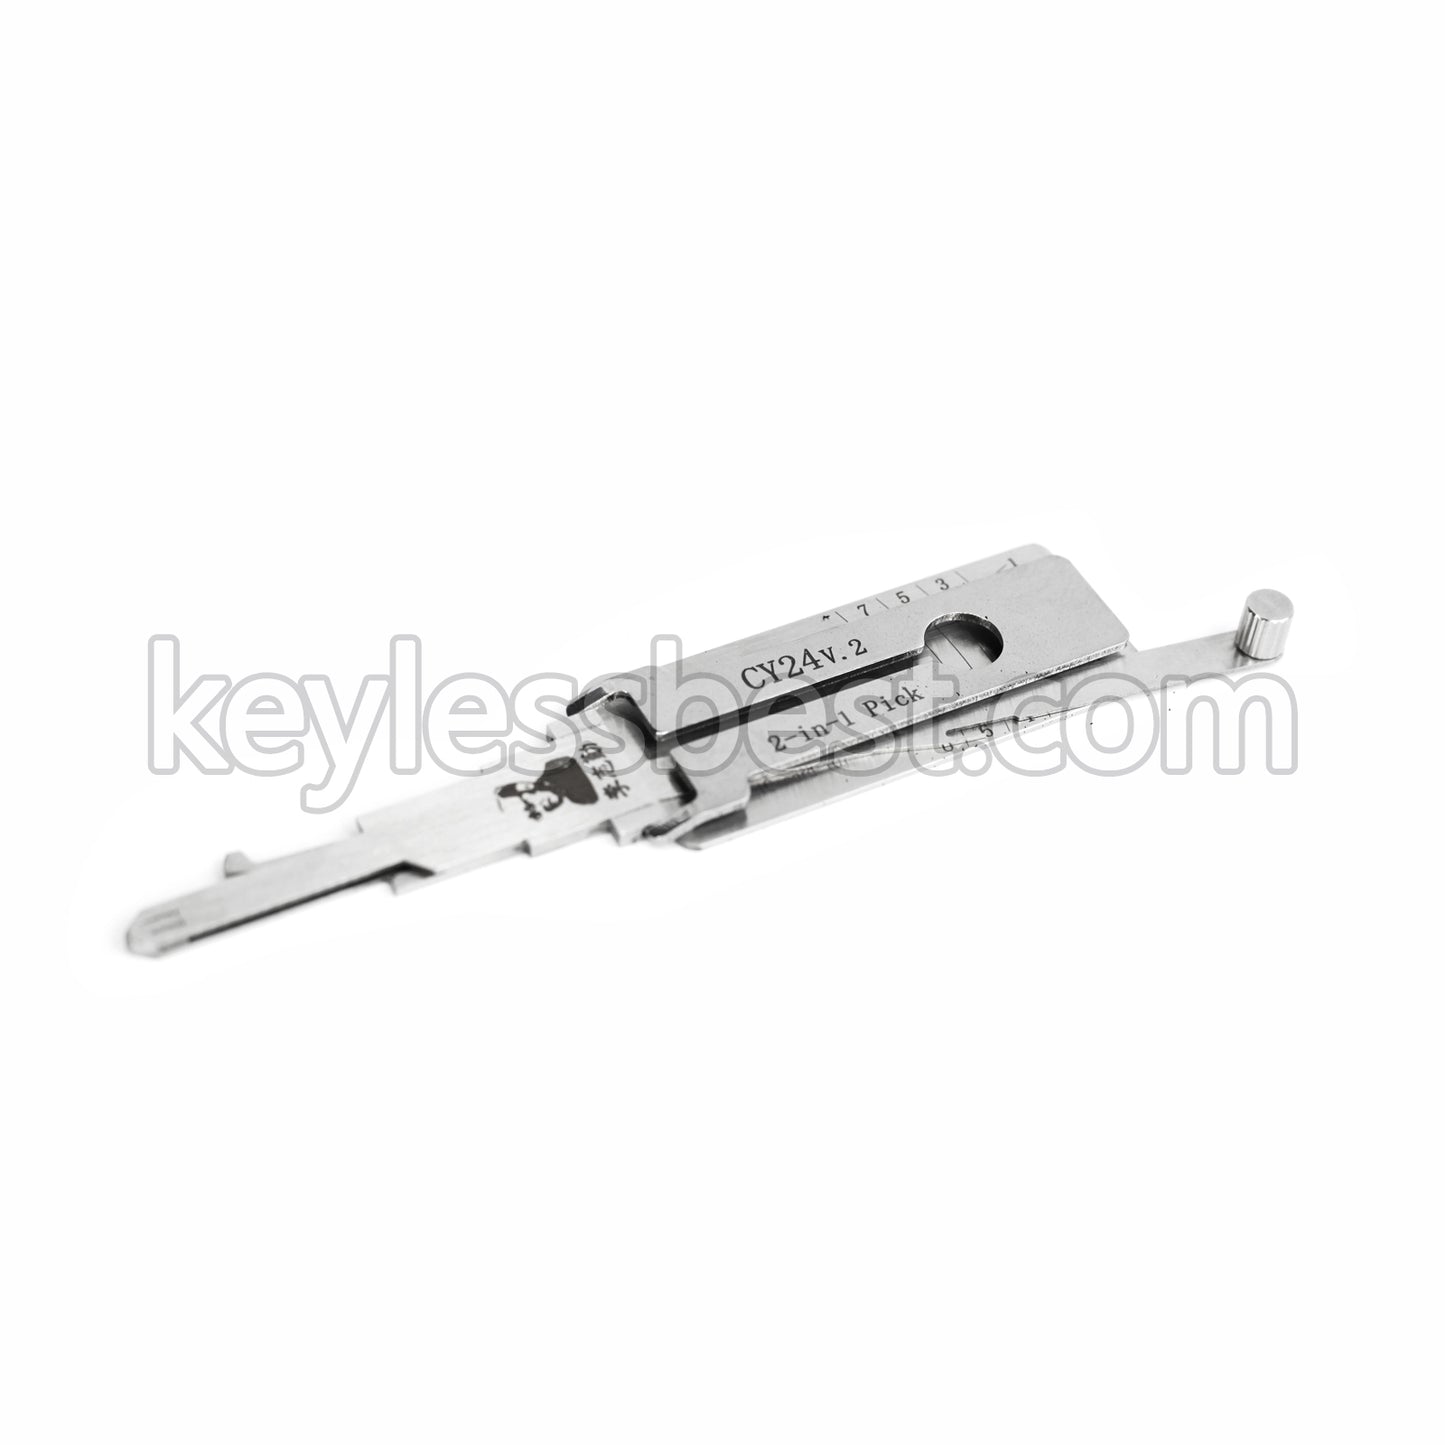 Original Lishi Tools CY24 2 in 1 locksmith tools lock pick For Door Lock Opener Professional Hand Tools